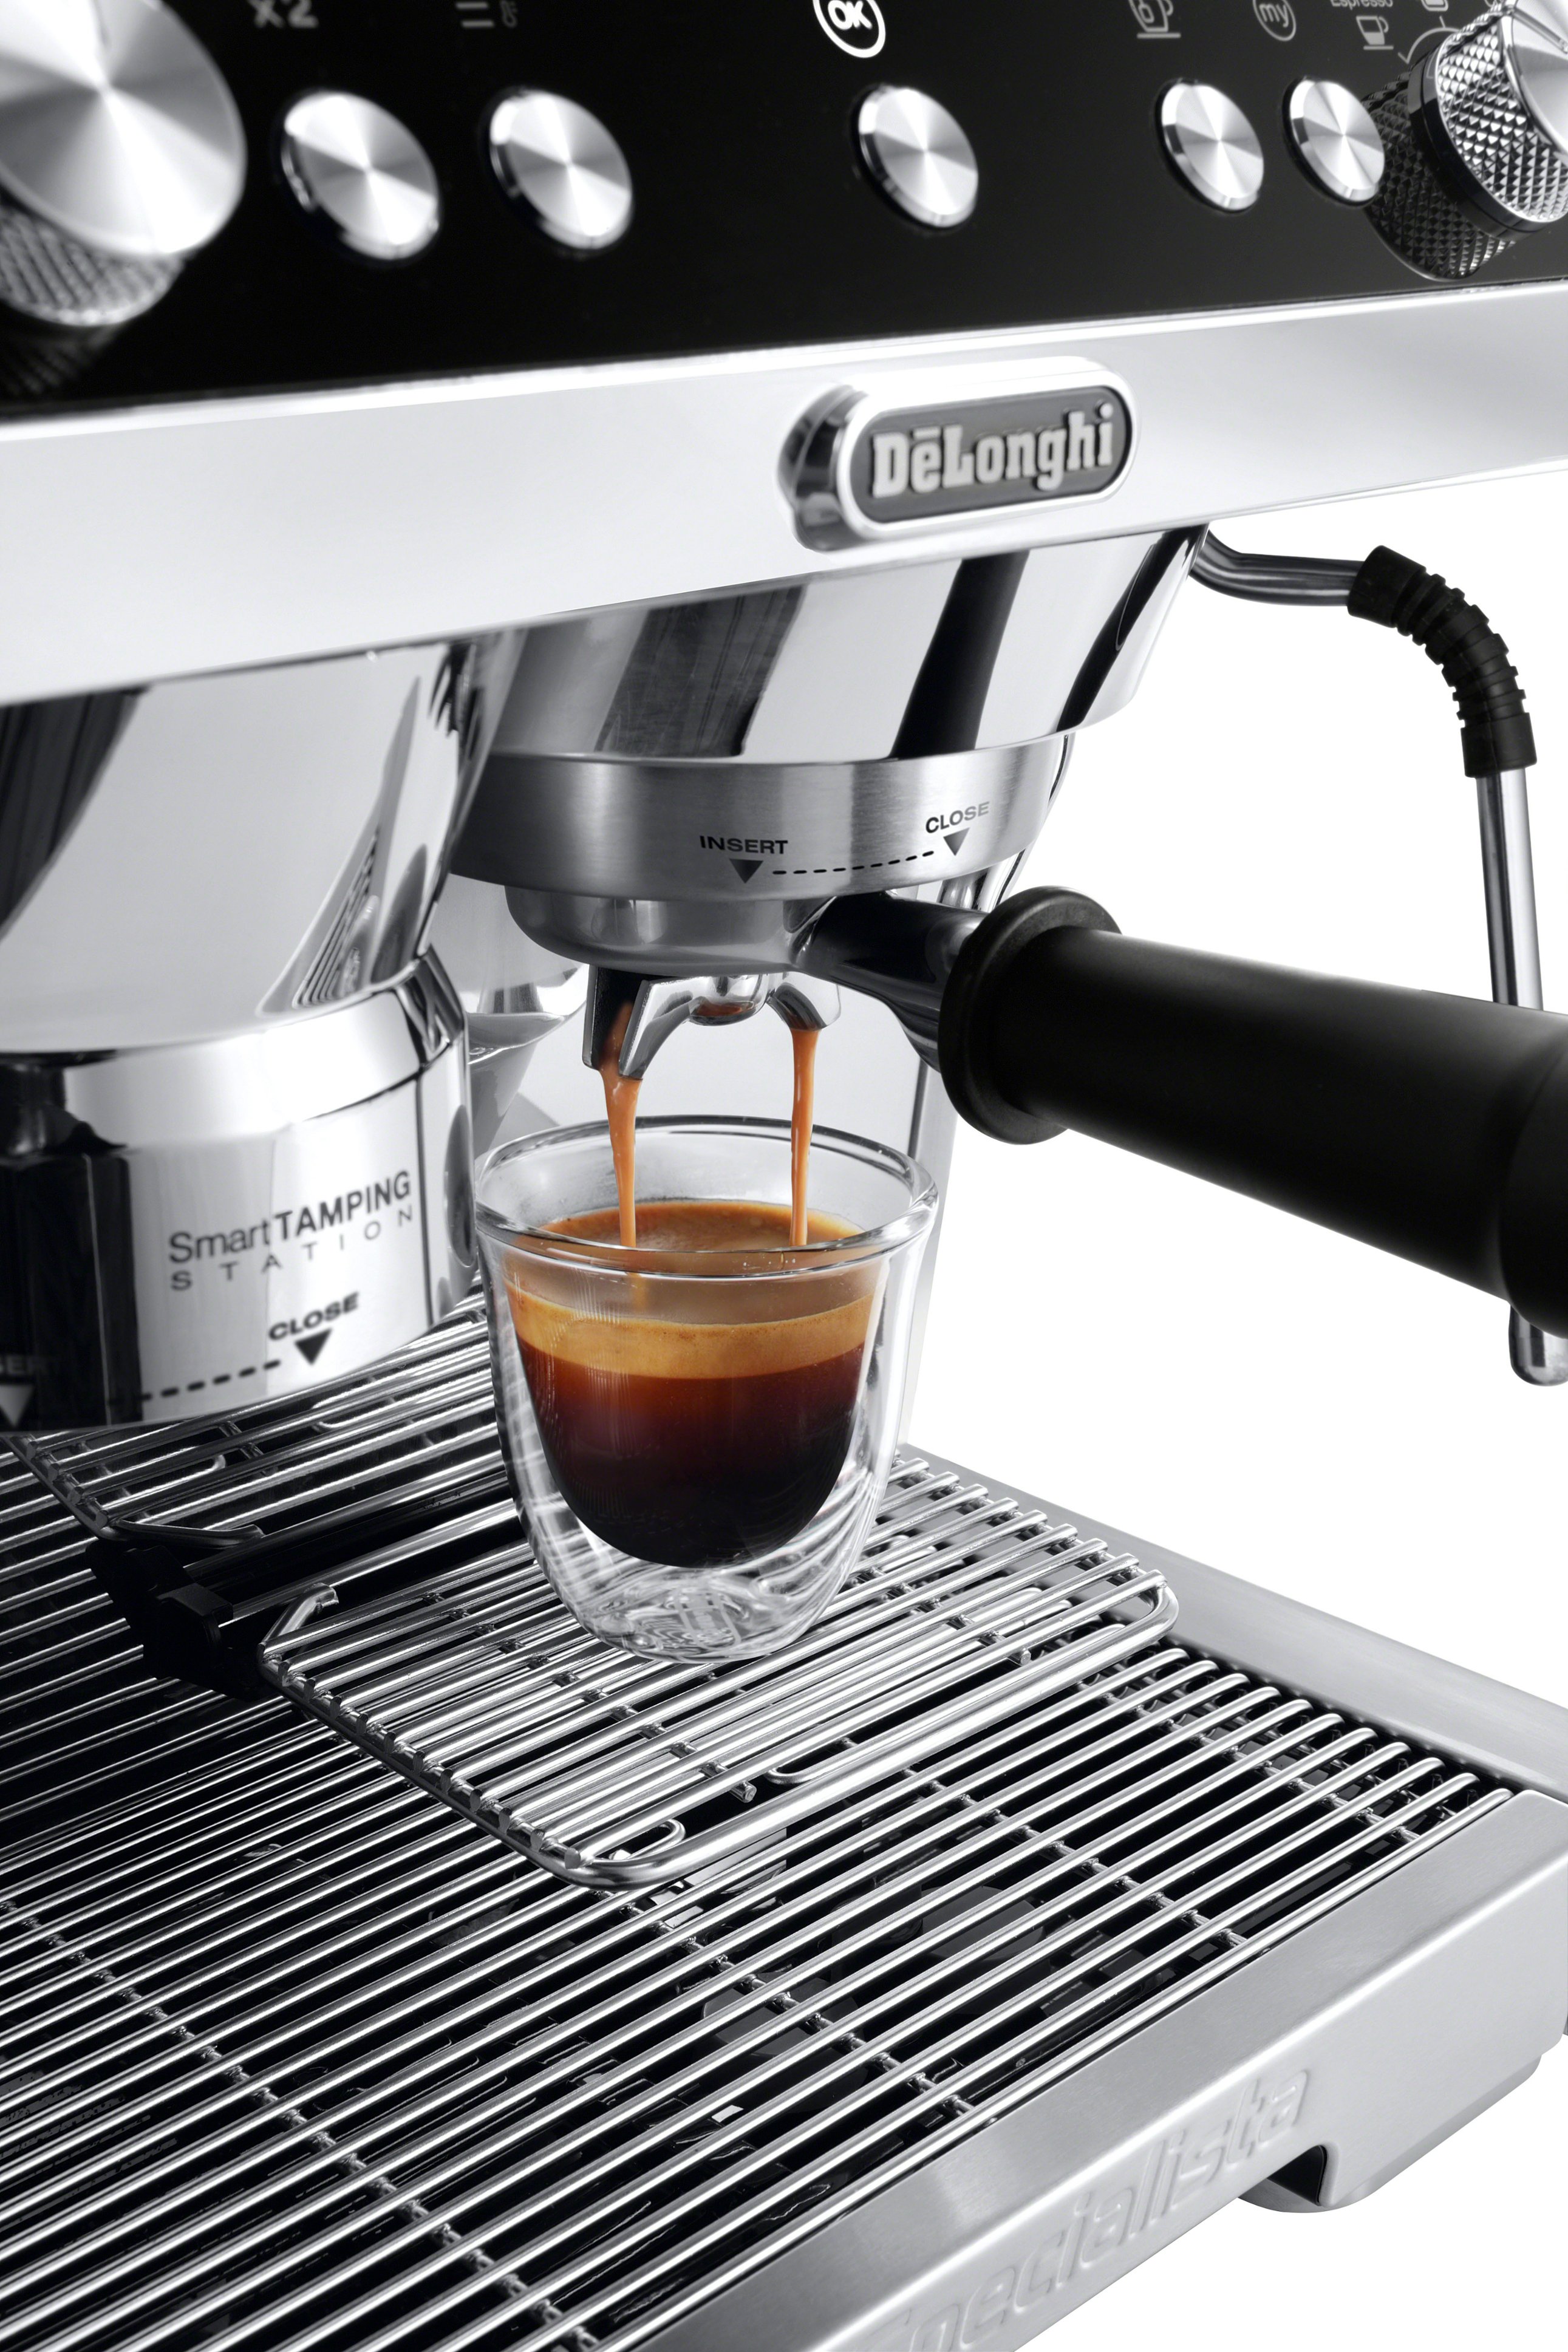 De'Longhi COM53X Combination Pump Espresso and Drip Coffee Machine with  for sale online